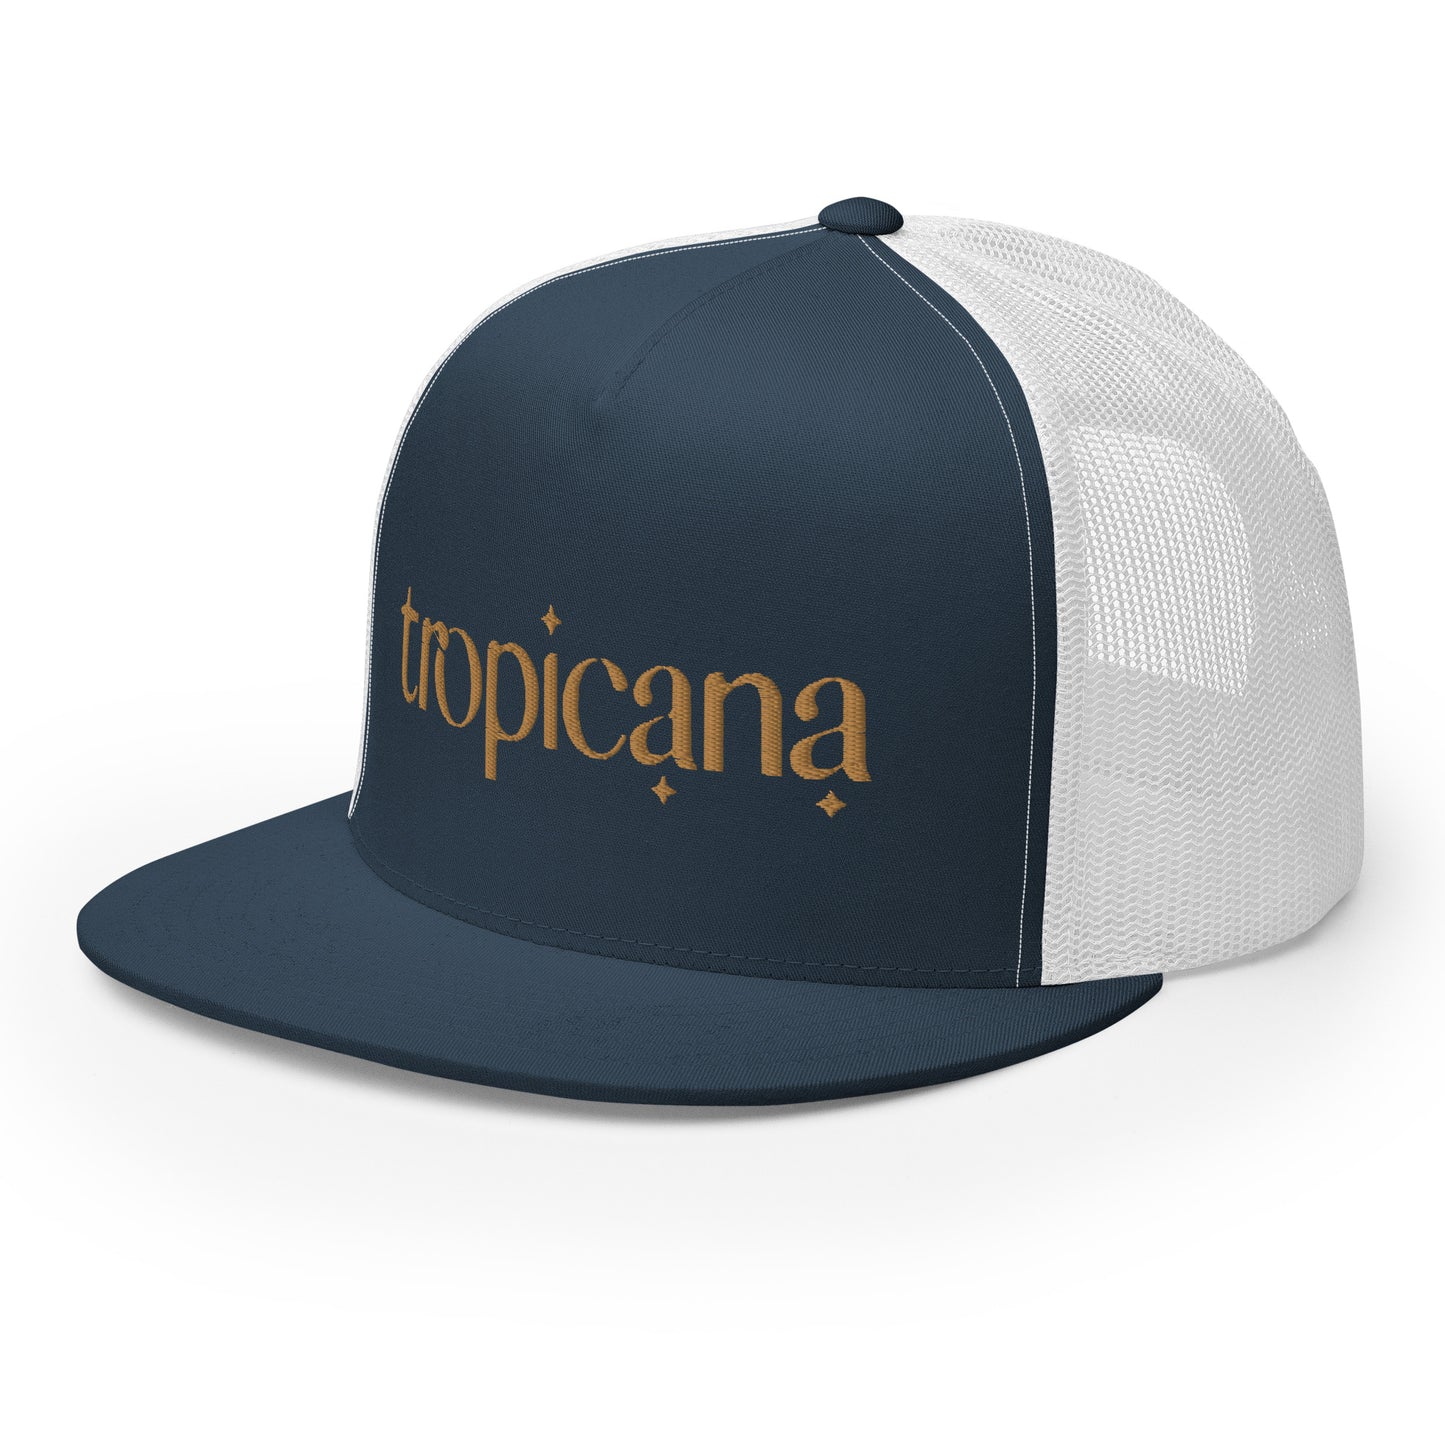 Viva Tropicana Vegas Strip Trucker Cap